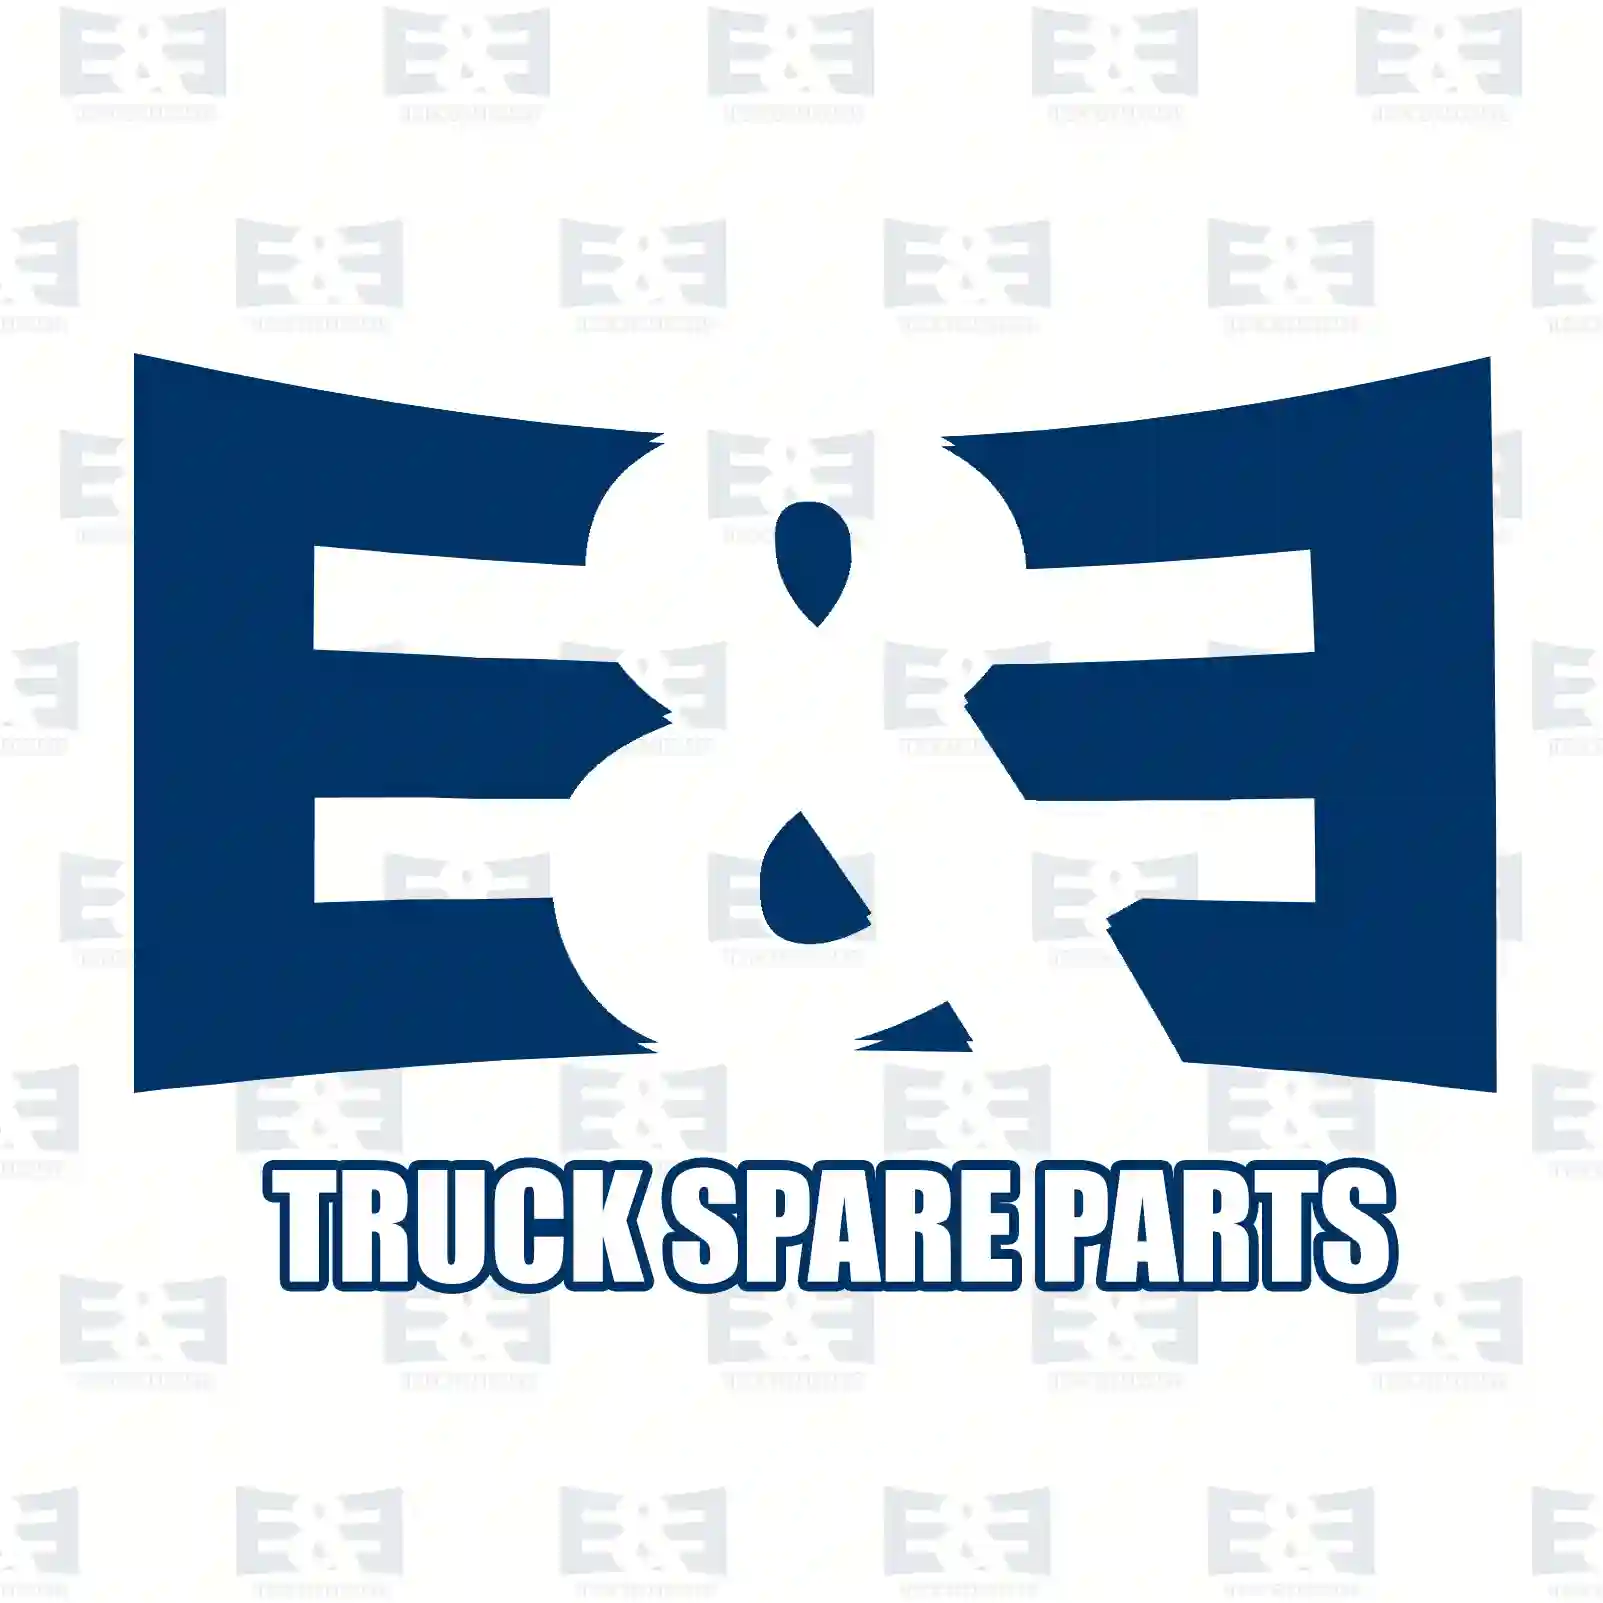 Engine mounting, 2E2206726, 81962100367, , , , , ||  2E2206726 E&E Truck Spare Parts | Truck Spare Parts, Auotomotive Spare Parts Engine mounting, 2E2206726, 81962100367, , , , , ||  2E2206726 E&E Truck Spare Parts | Truck Spare Parts, Auotomotive Spare Parts